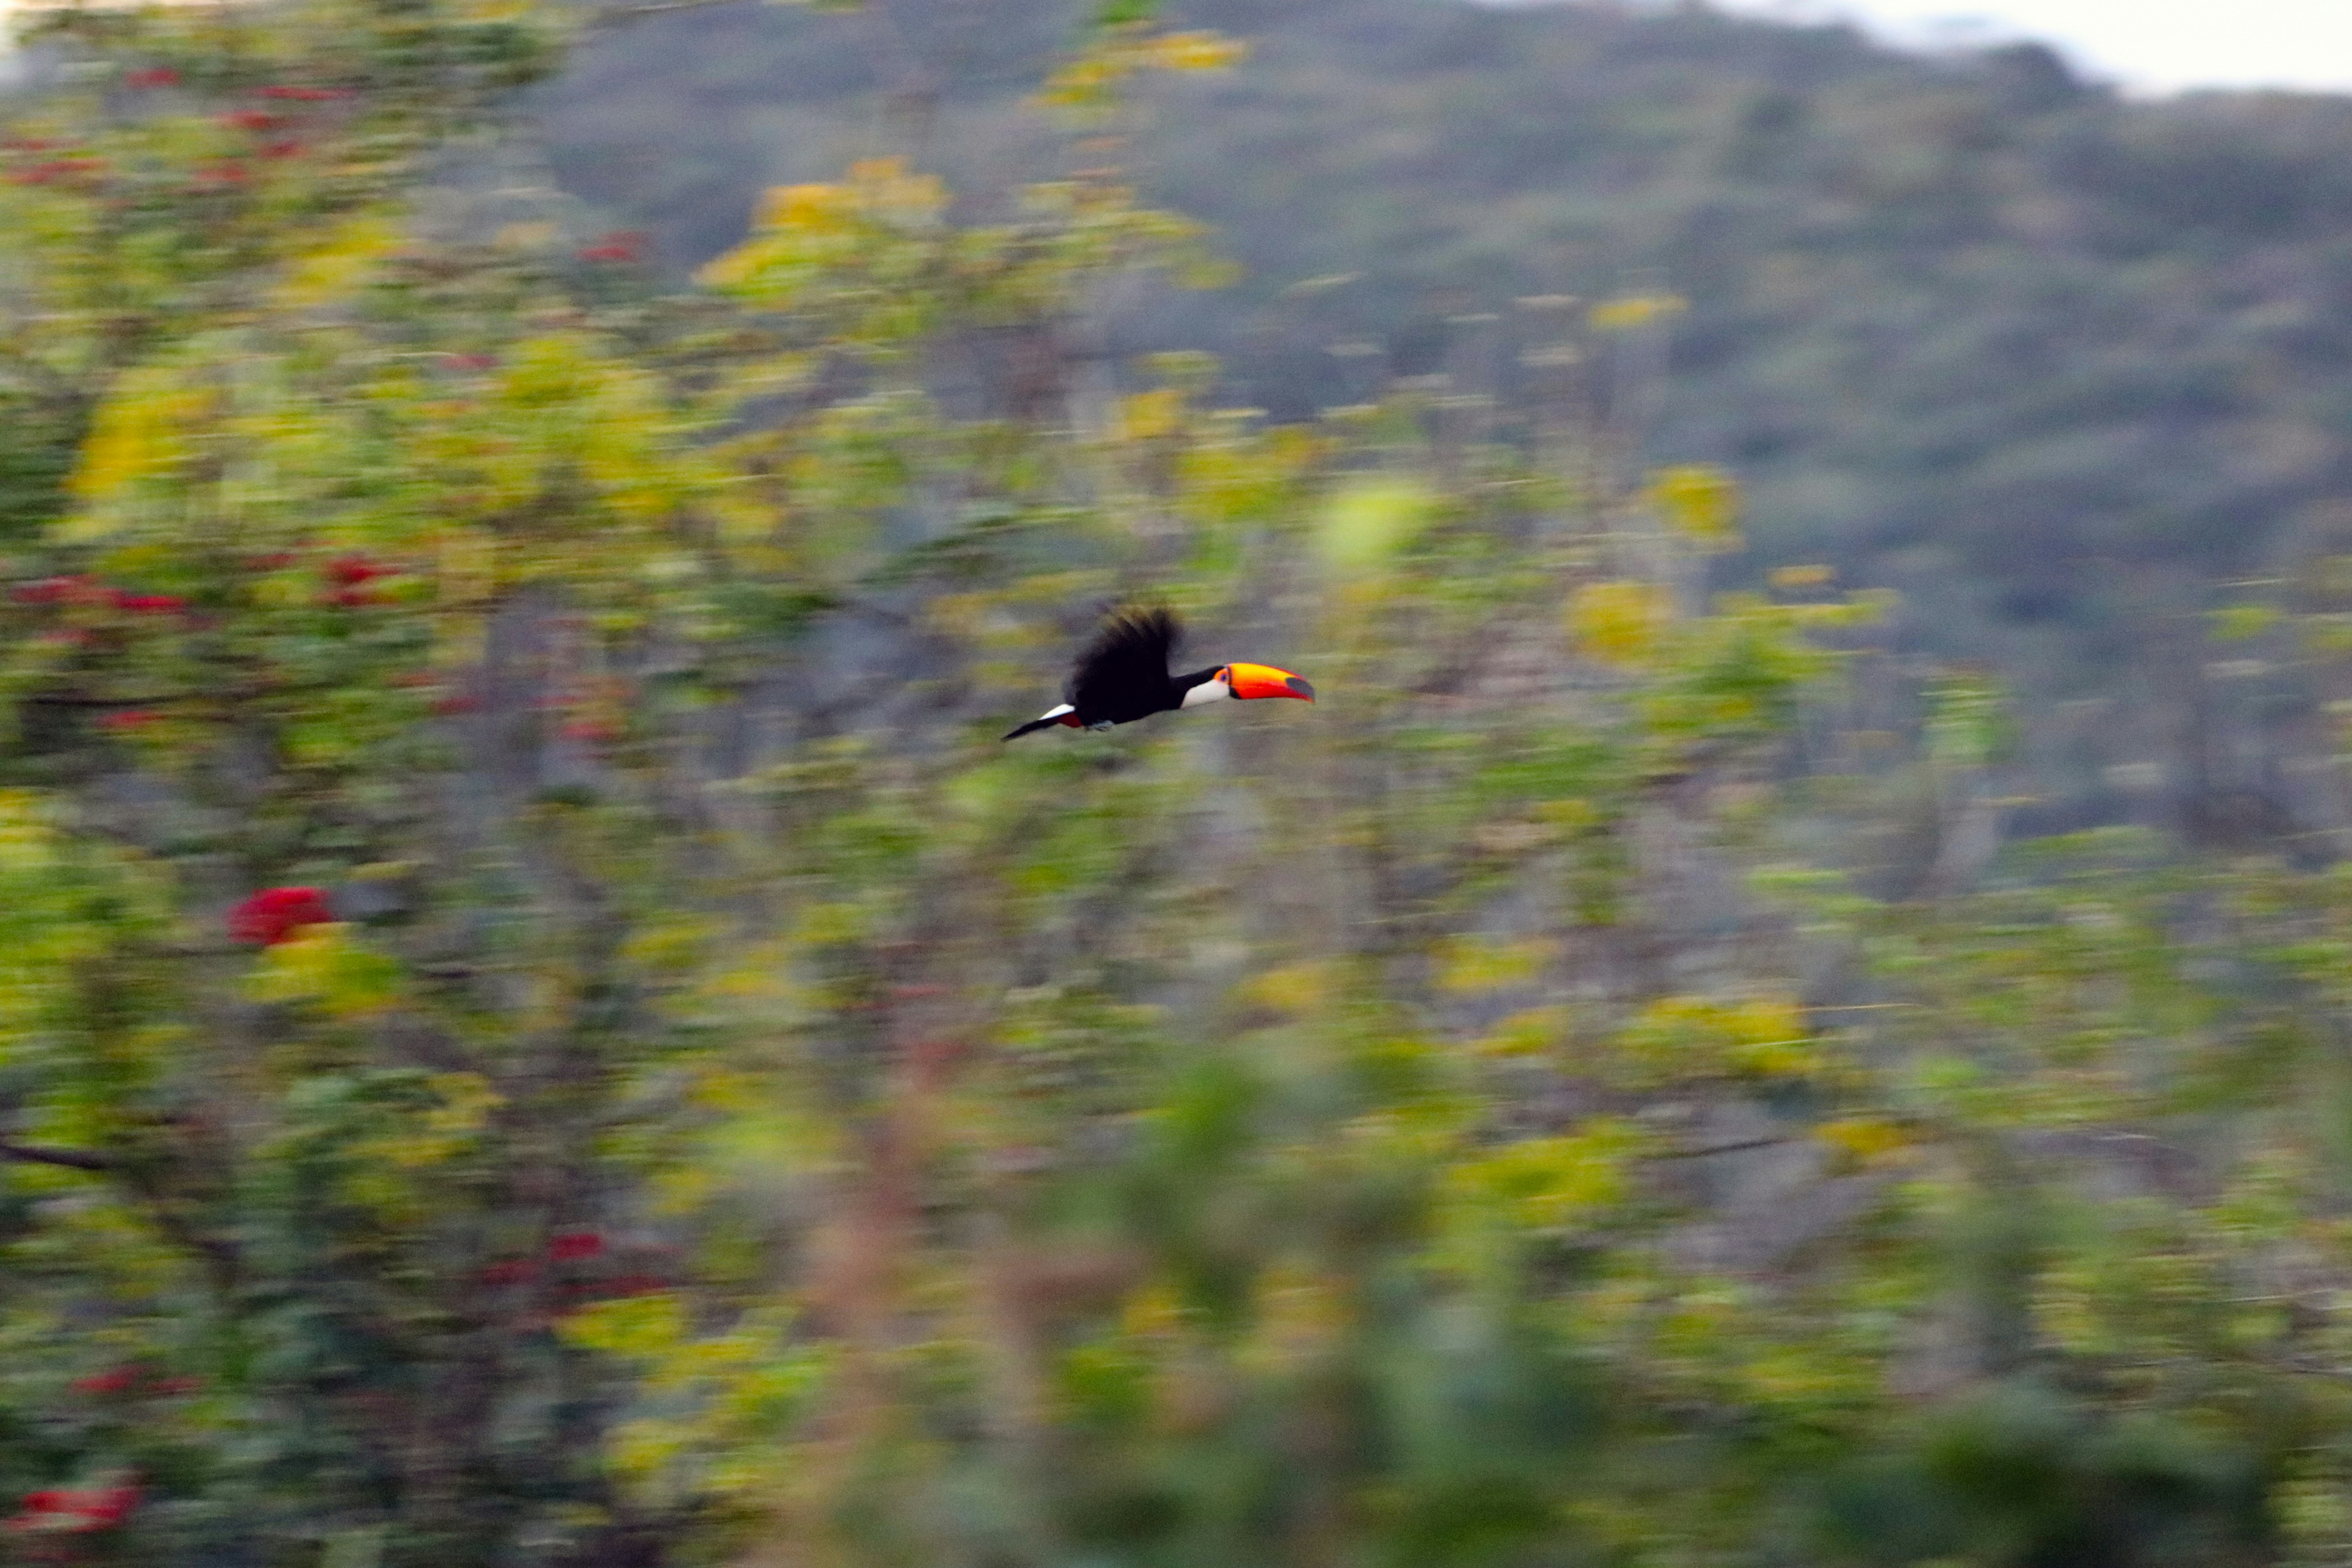 toucan bird flying near trees